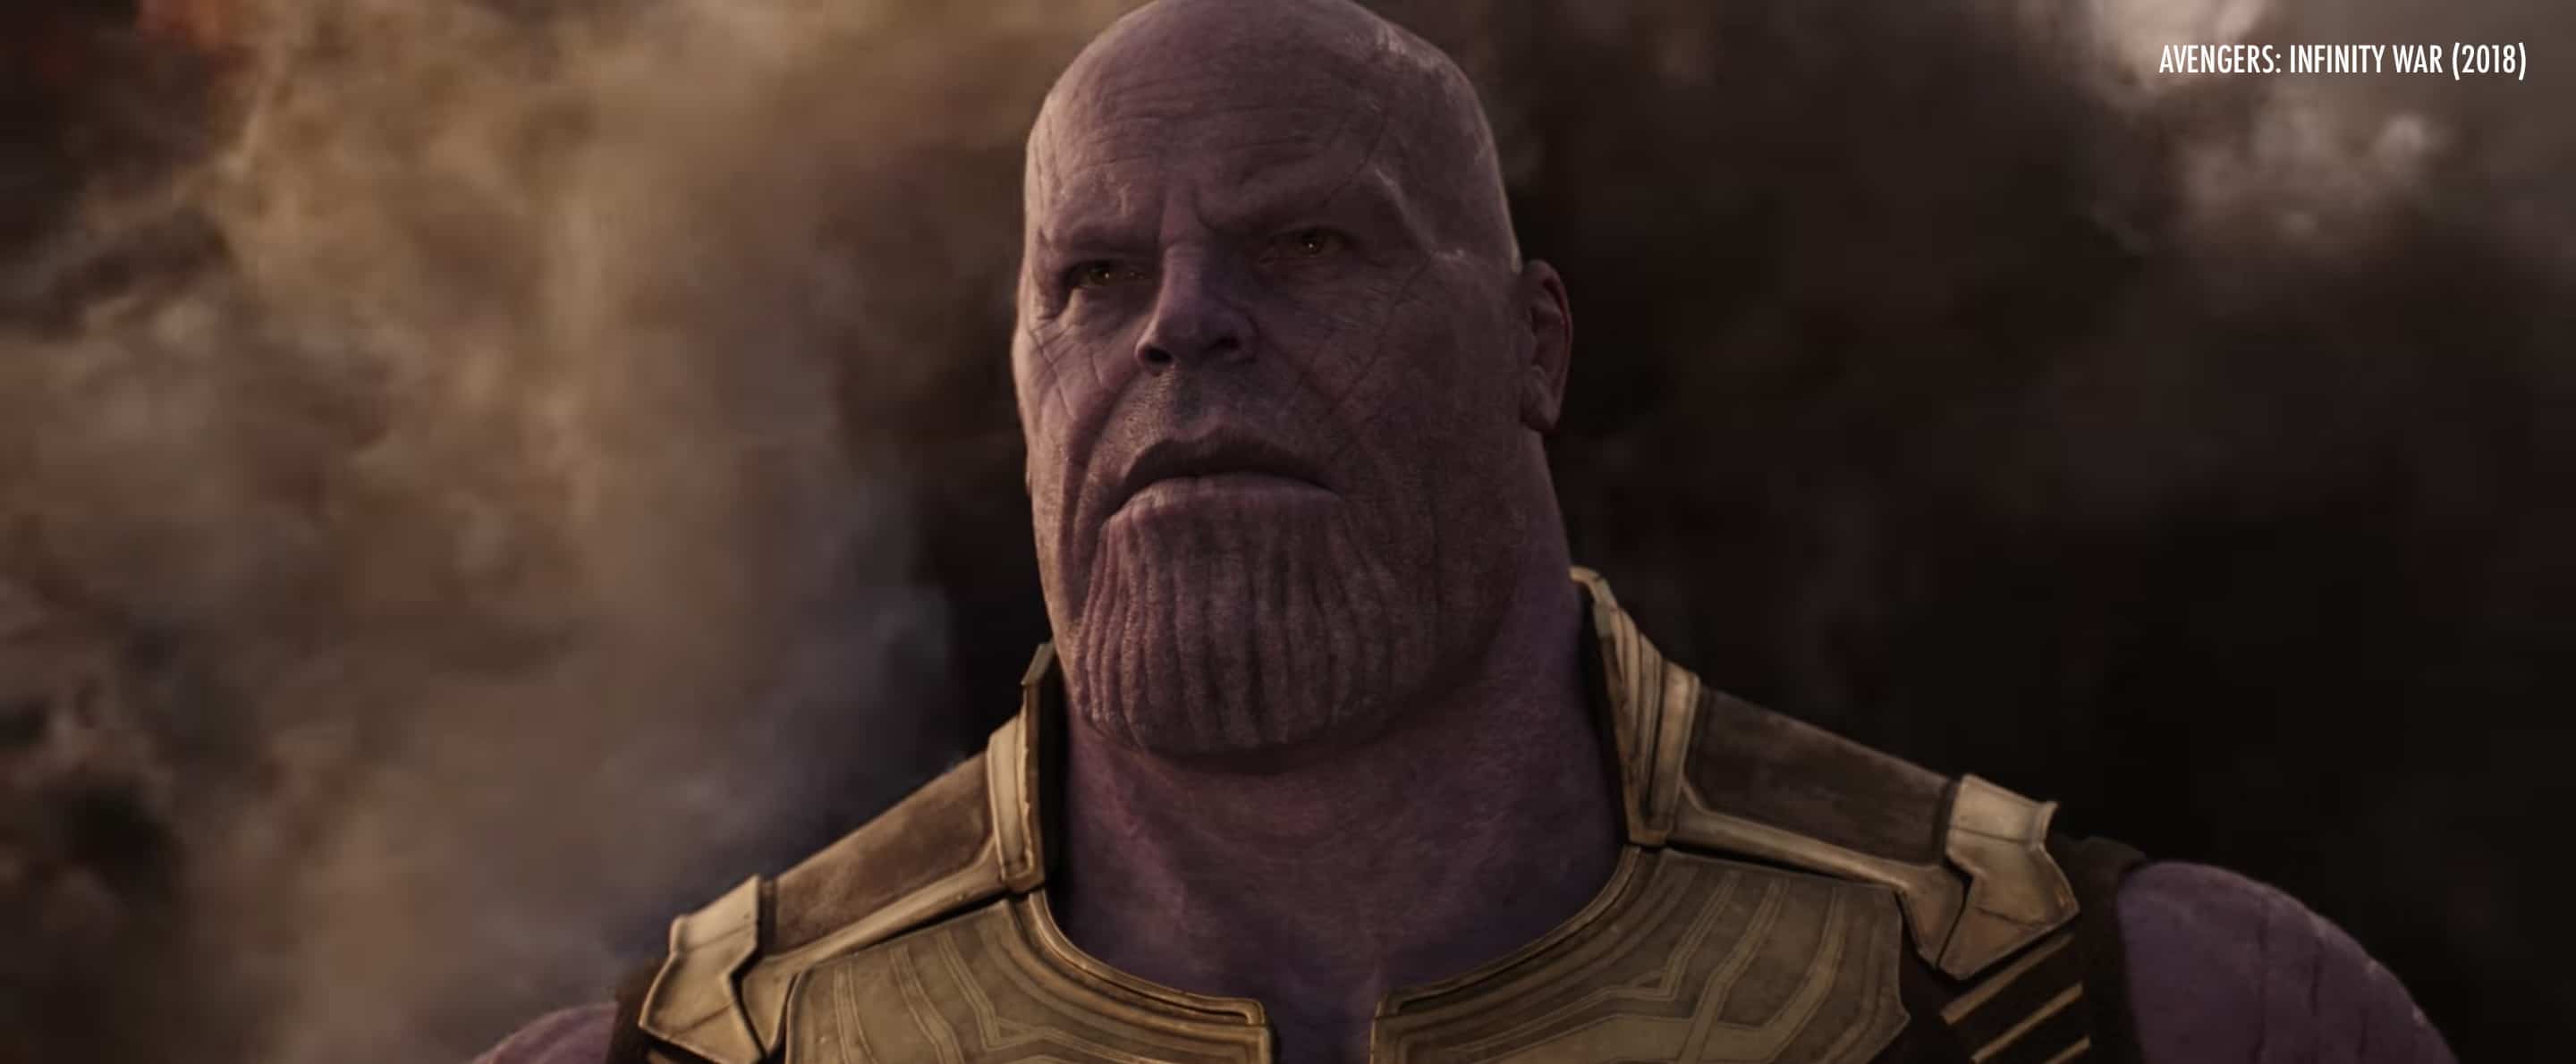 Avengers Infinity War (2018) Thanos